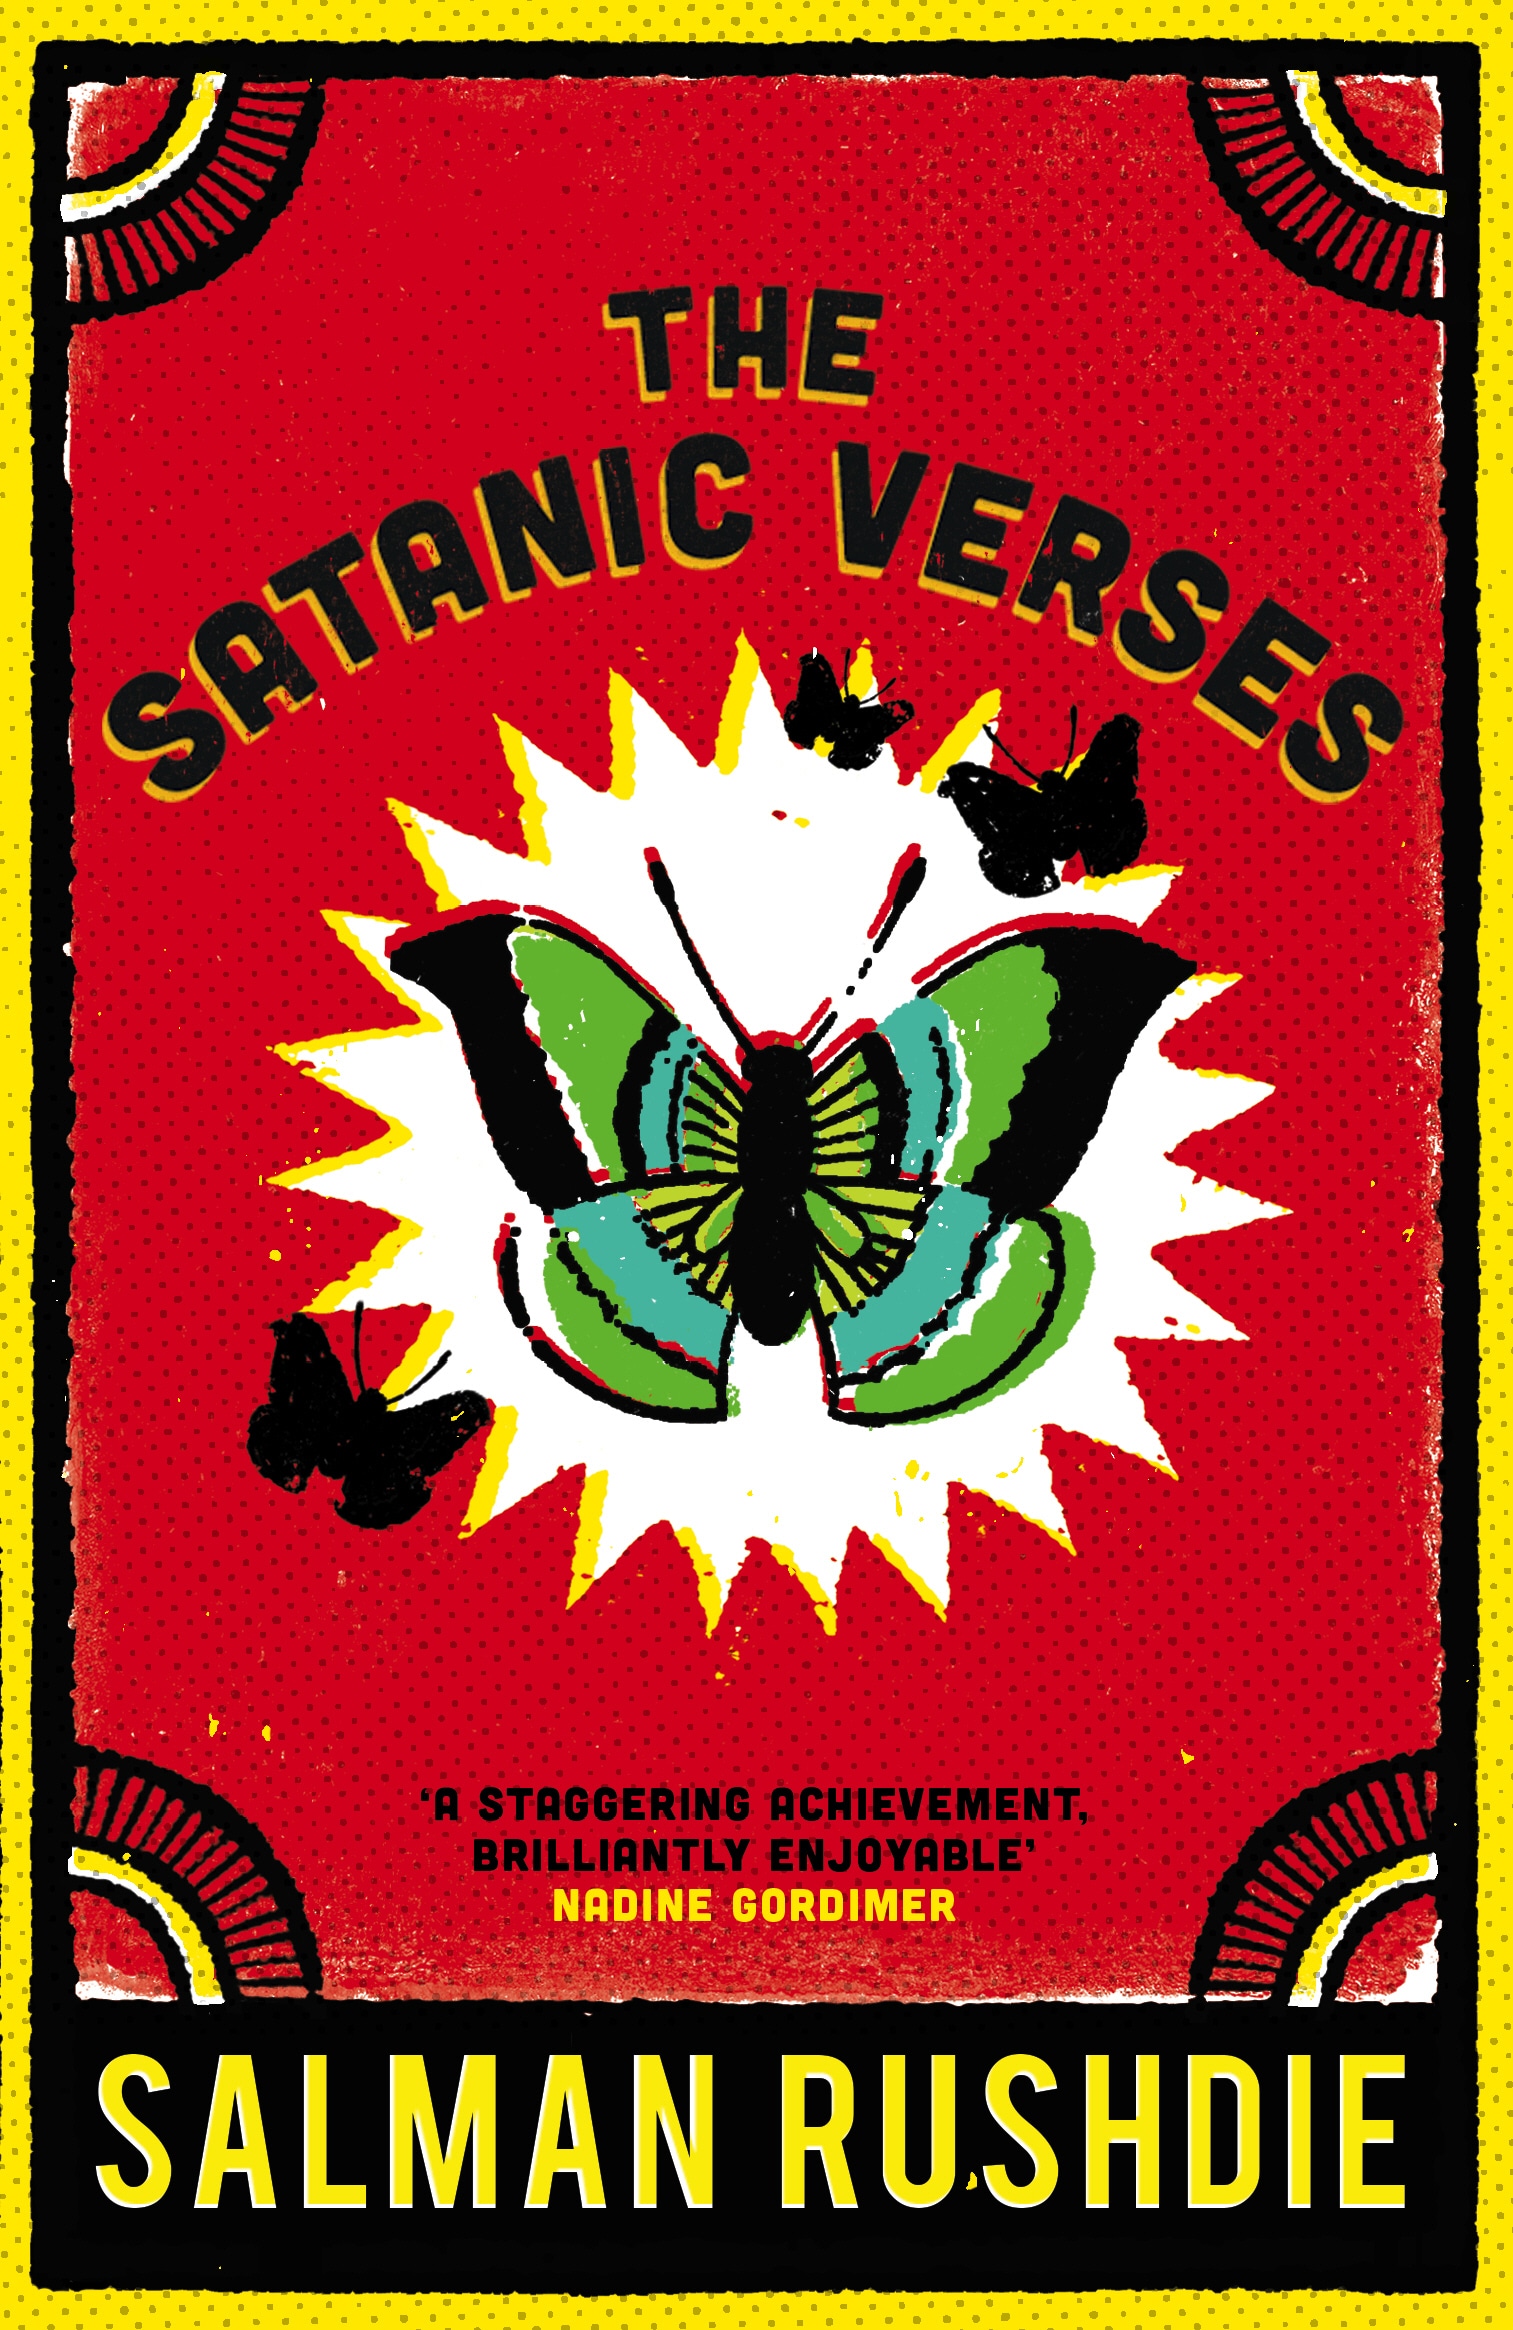 Book “The Satanic Verses” by Salman Rushdie — January 8, 1998